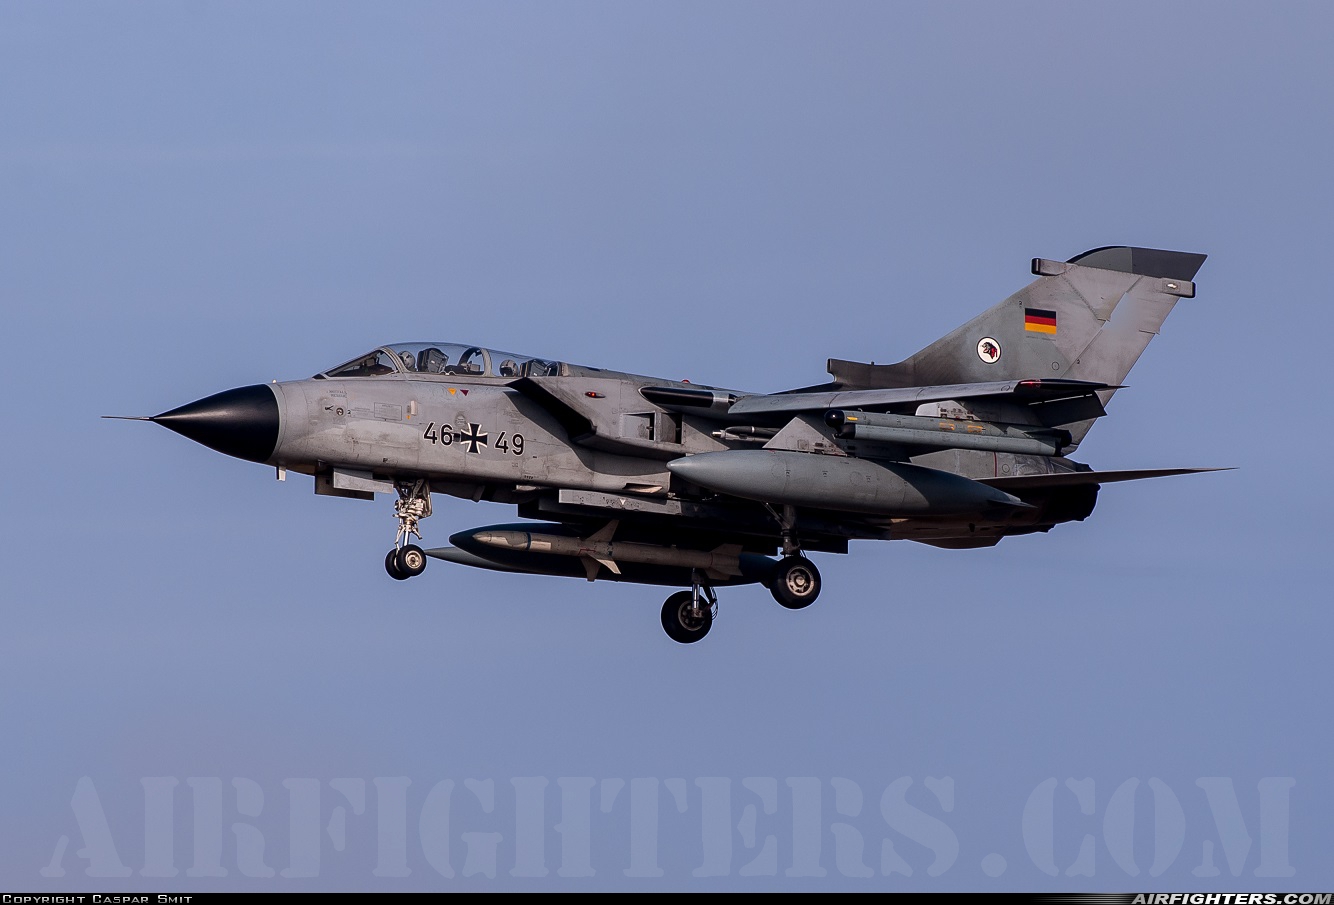 Germany - Air Force Panavia Tornado ECR 46+49 at Schleswig (- Jagel) (WBG / ETNS), Germany